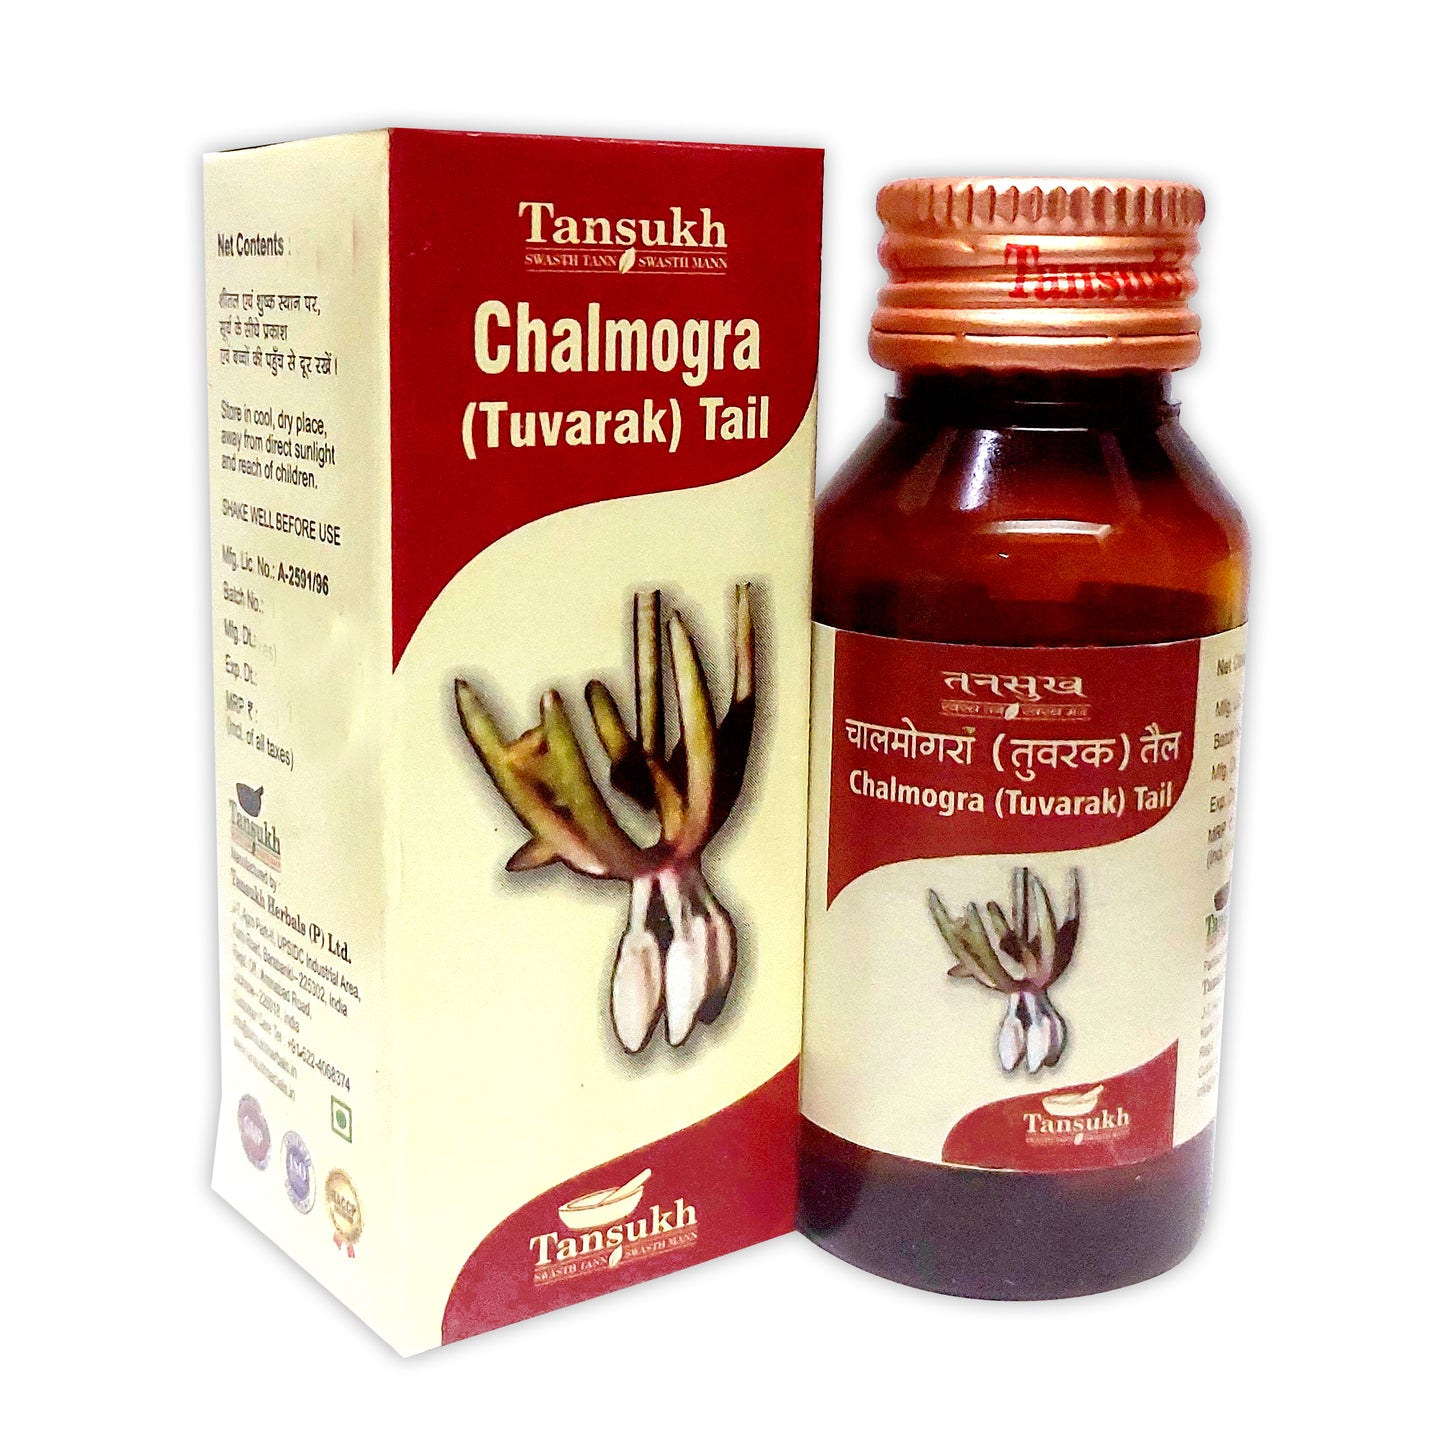 Chalmogra (Tuvarak) Tail or Chalmogra Oil